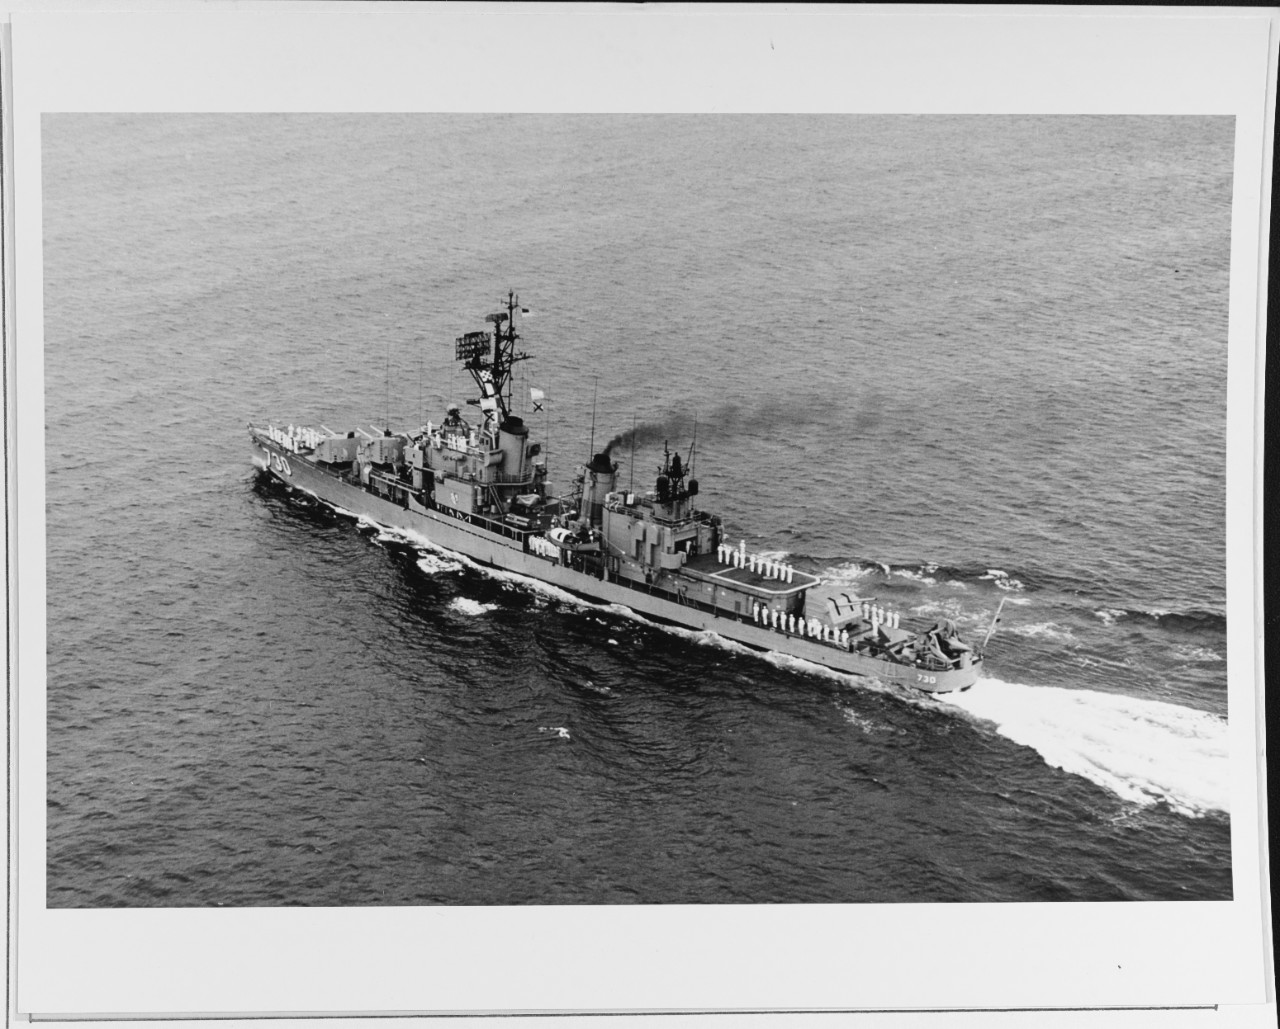 USS COLLETT (DD-730)